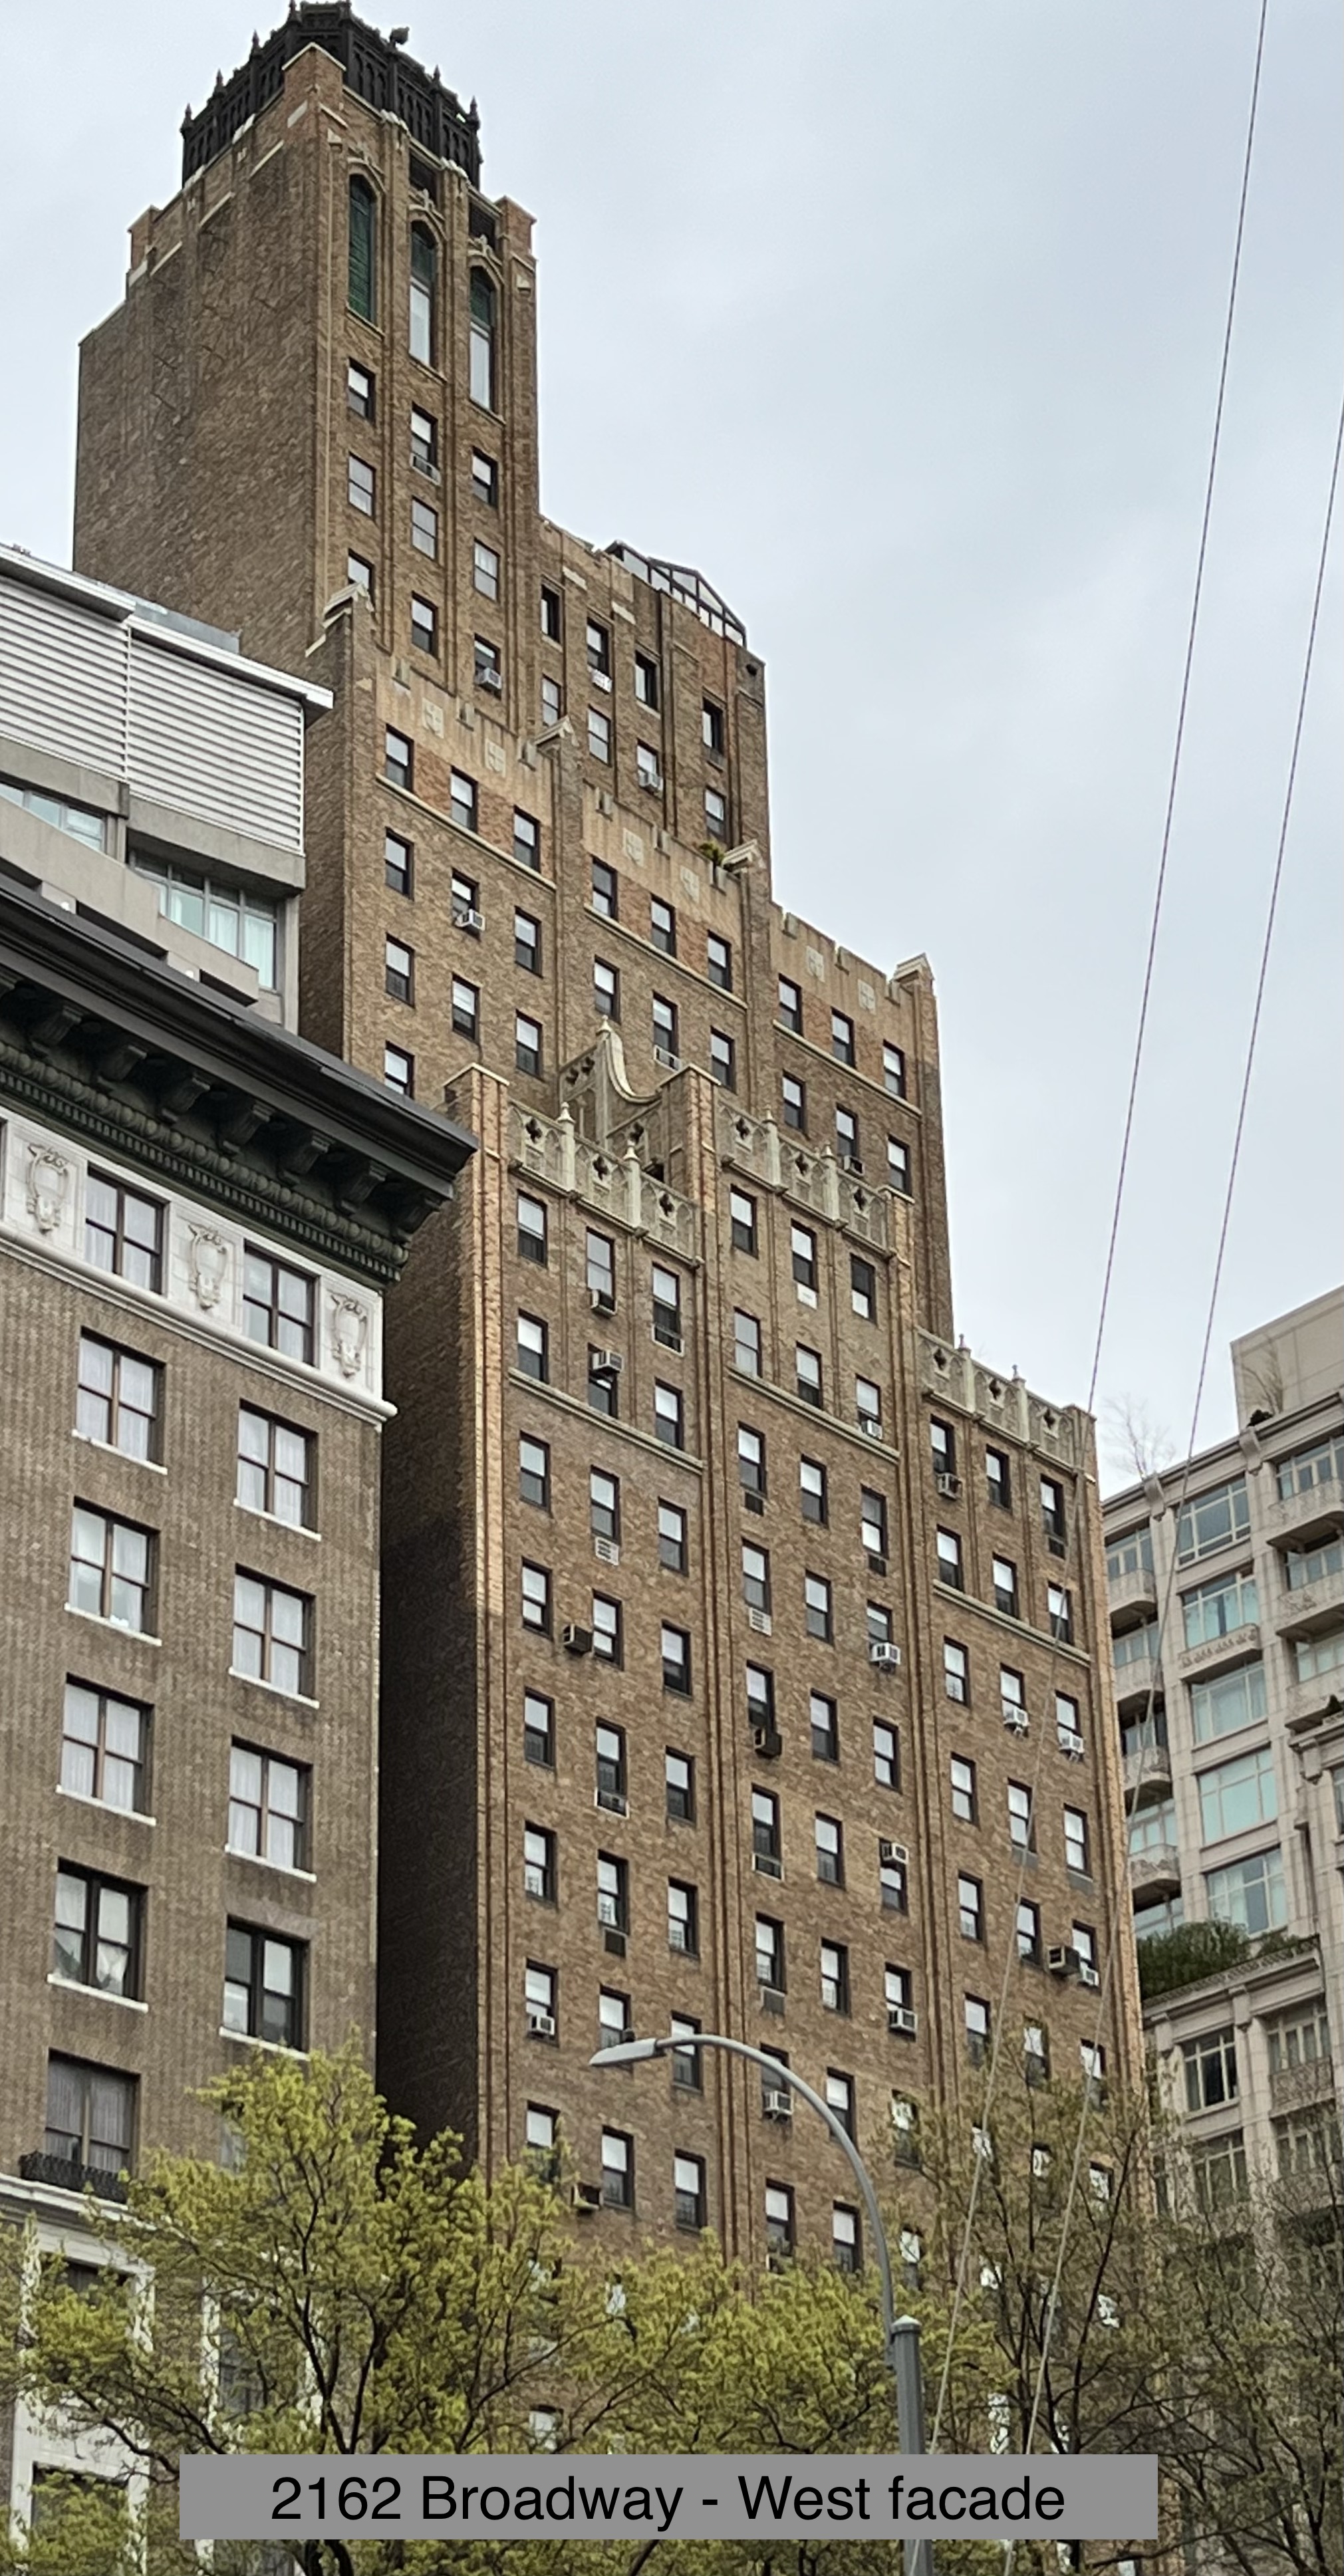 2162 Broadway: Manhattan Towers Hotel